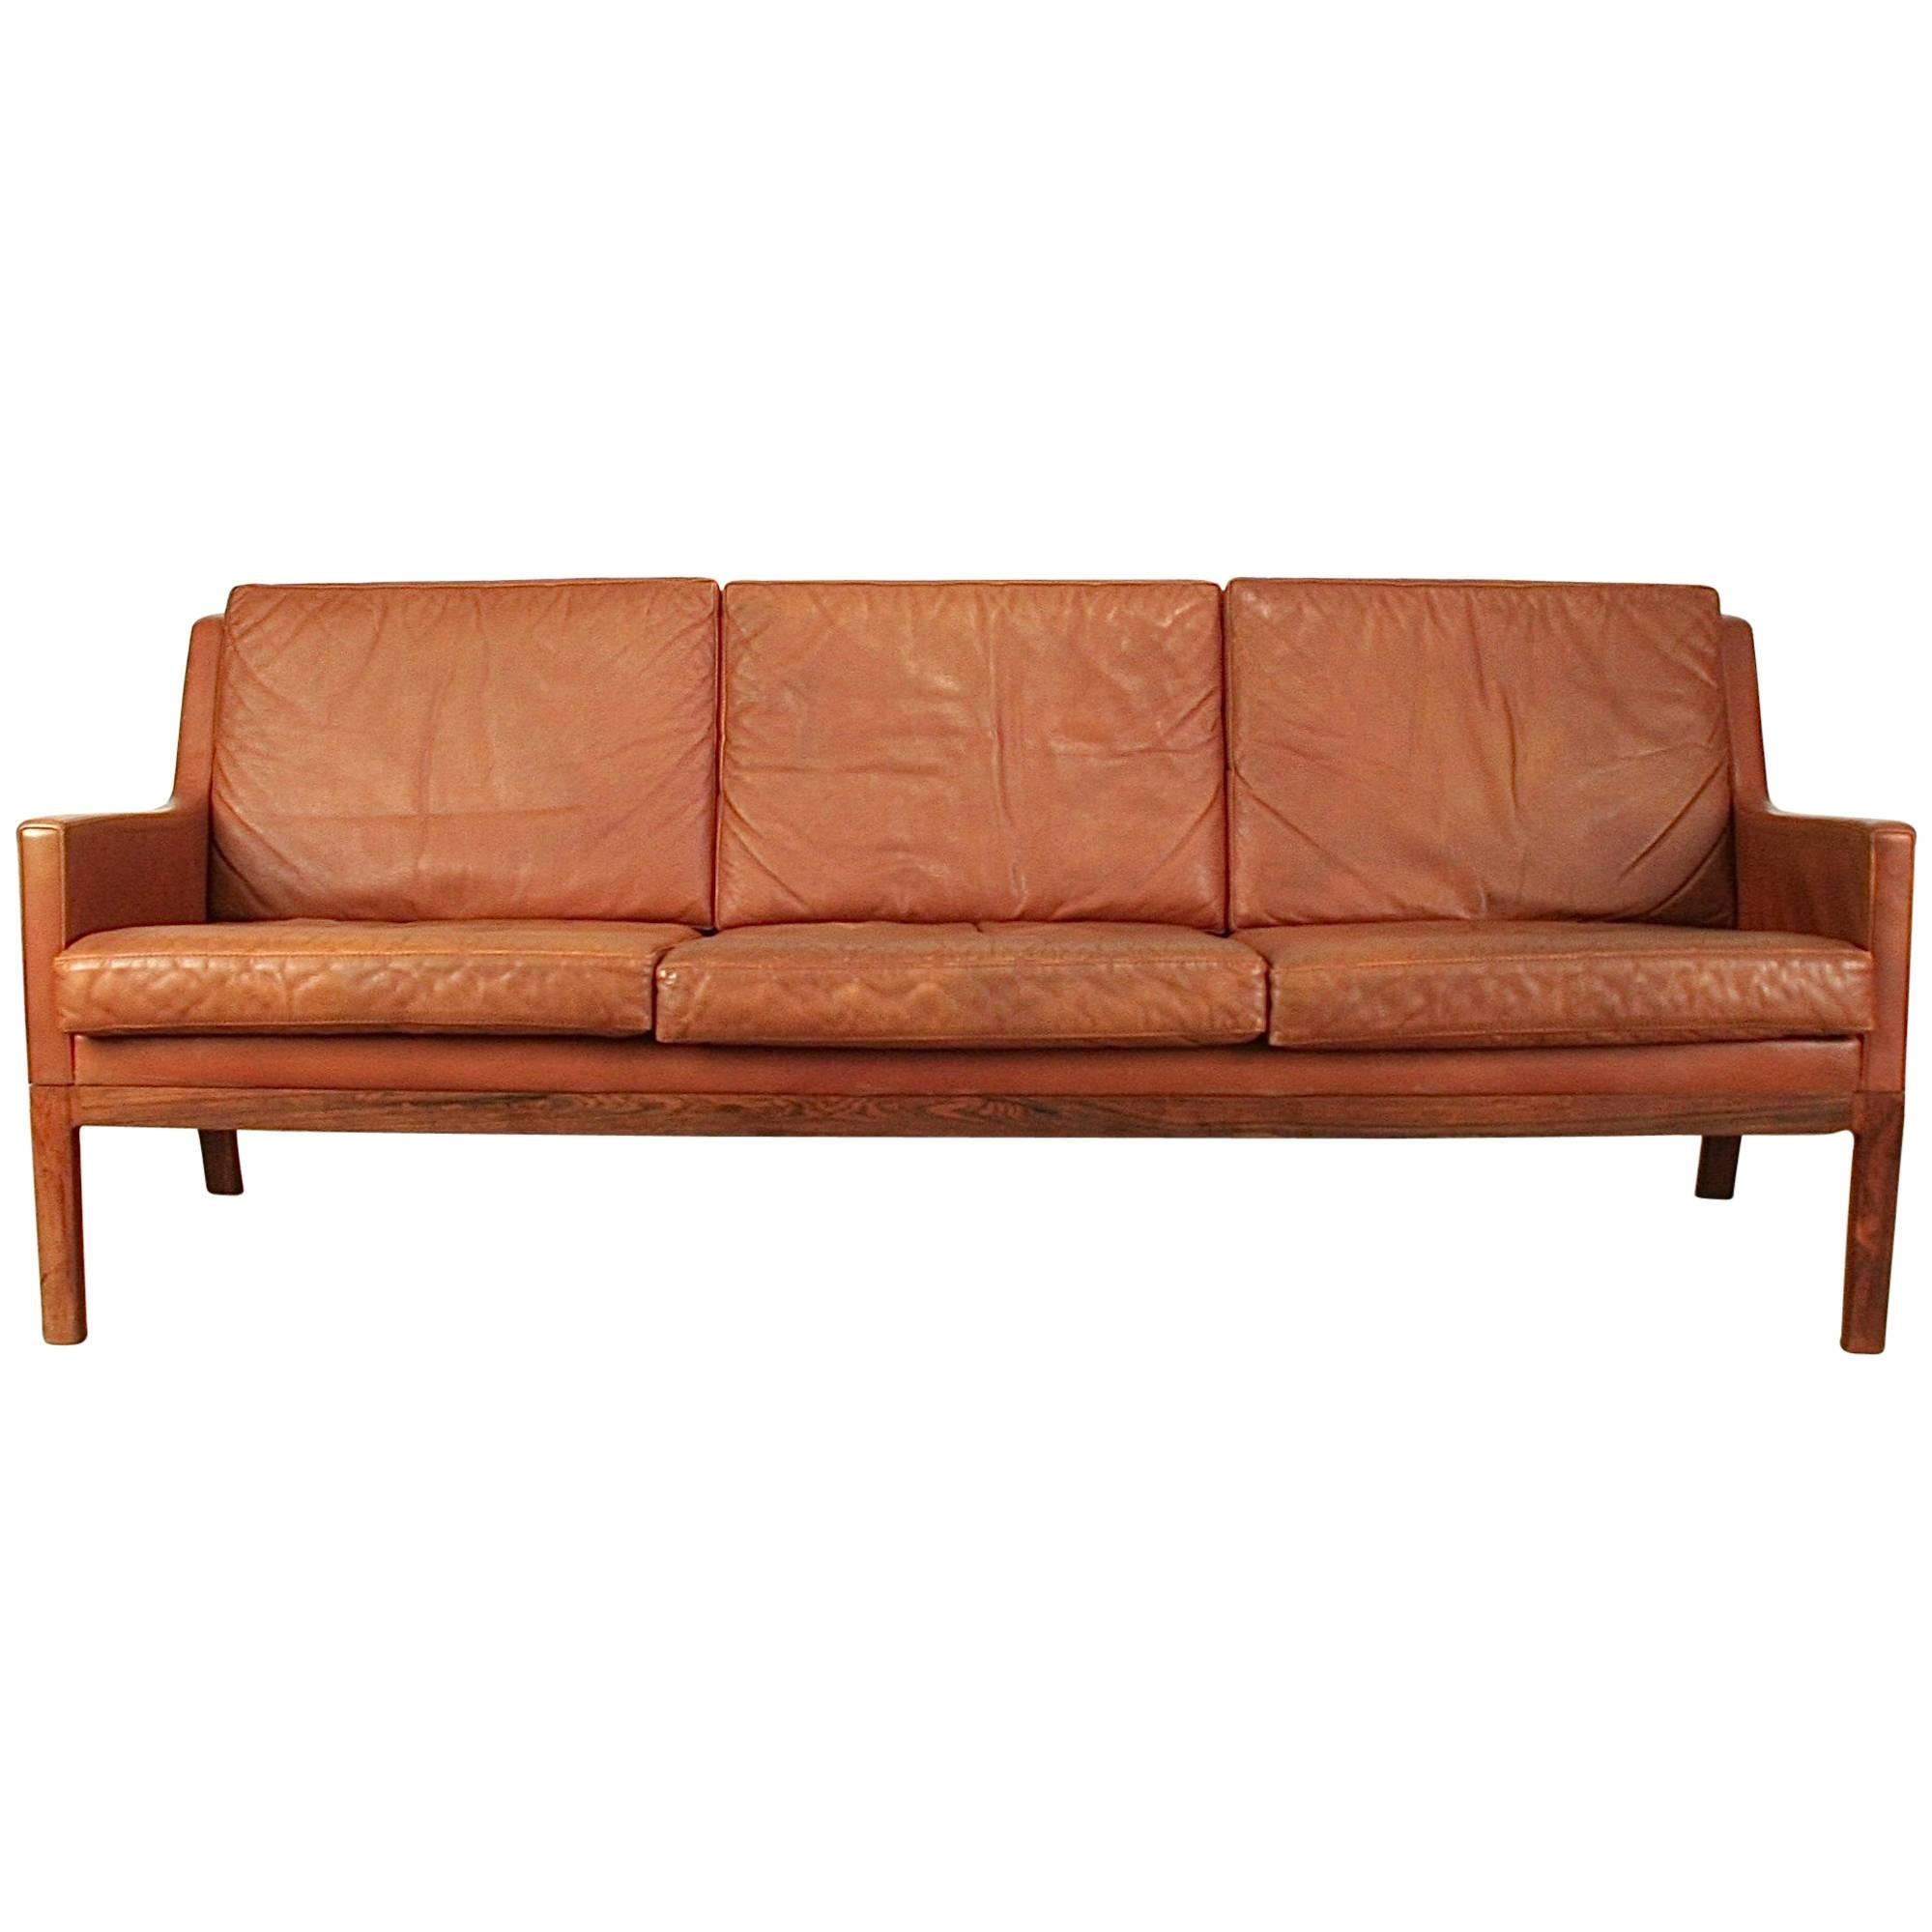 Vintage Danish Leather and Rosewood Three-Seat Sofa